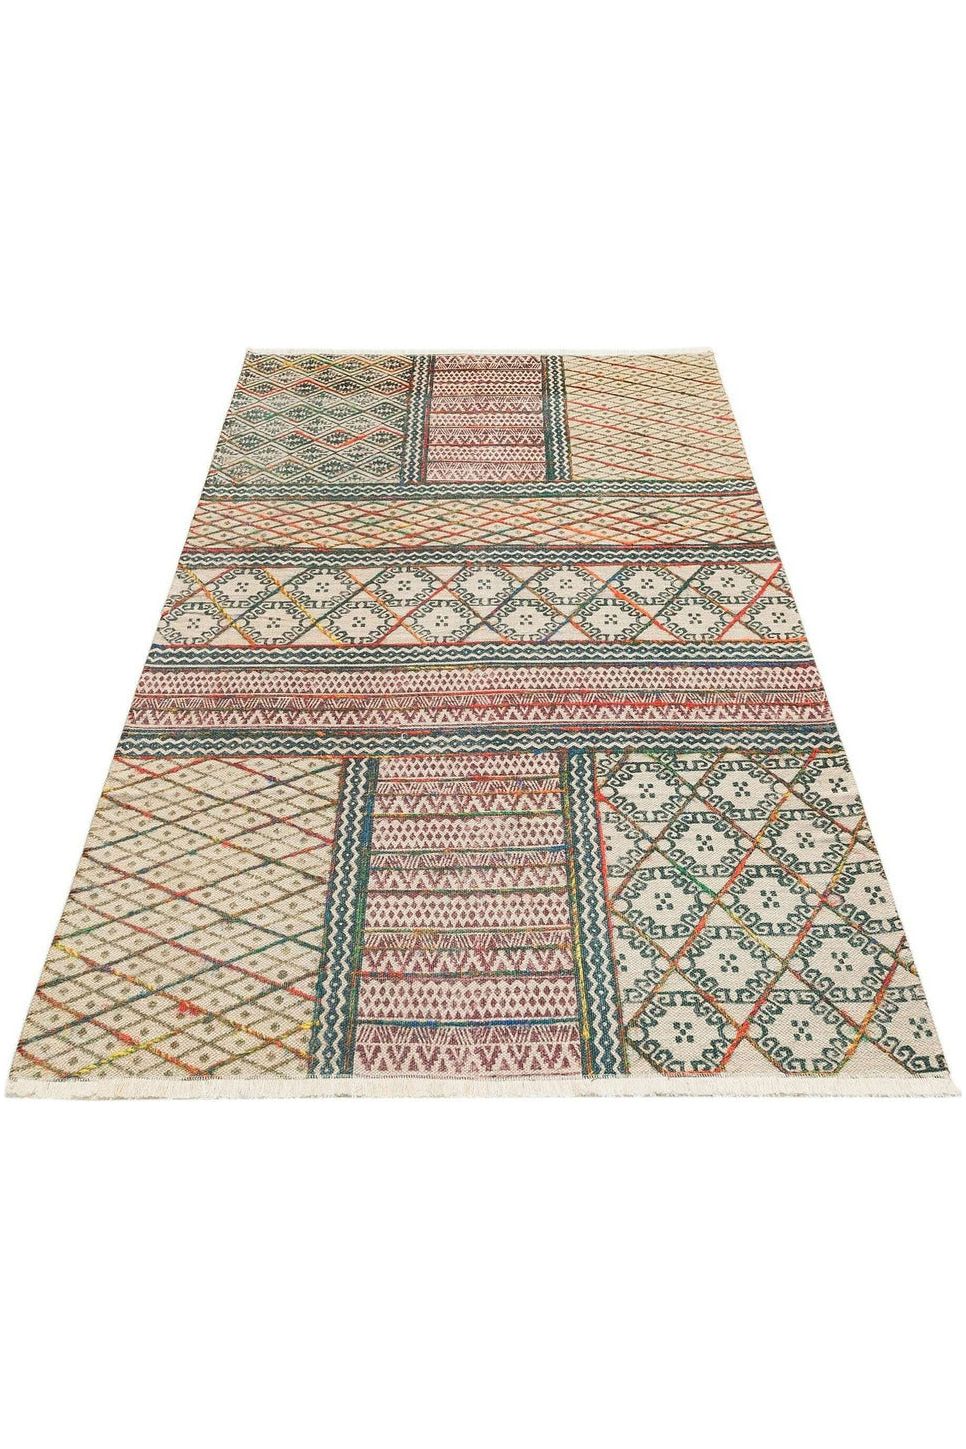 #Turkish_Carpets_Rugs# #Modern_Carpets# #Abrash_Carpets#Rb 05 L.Multy